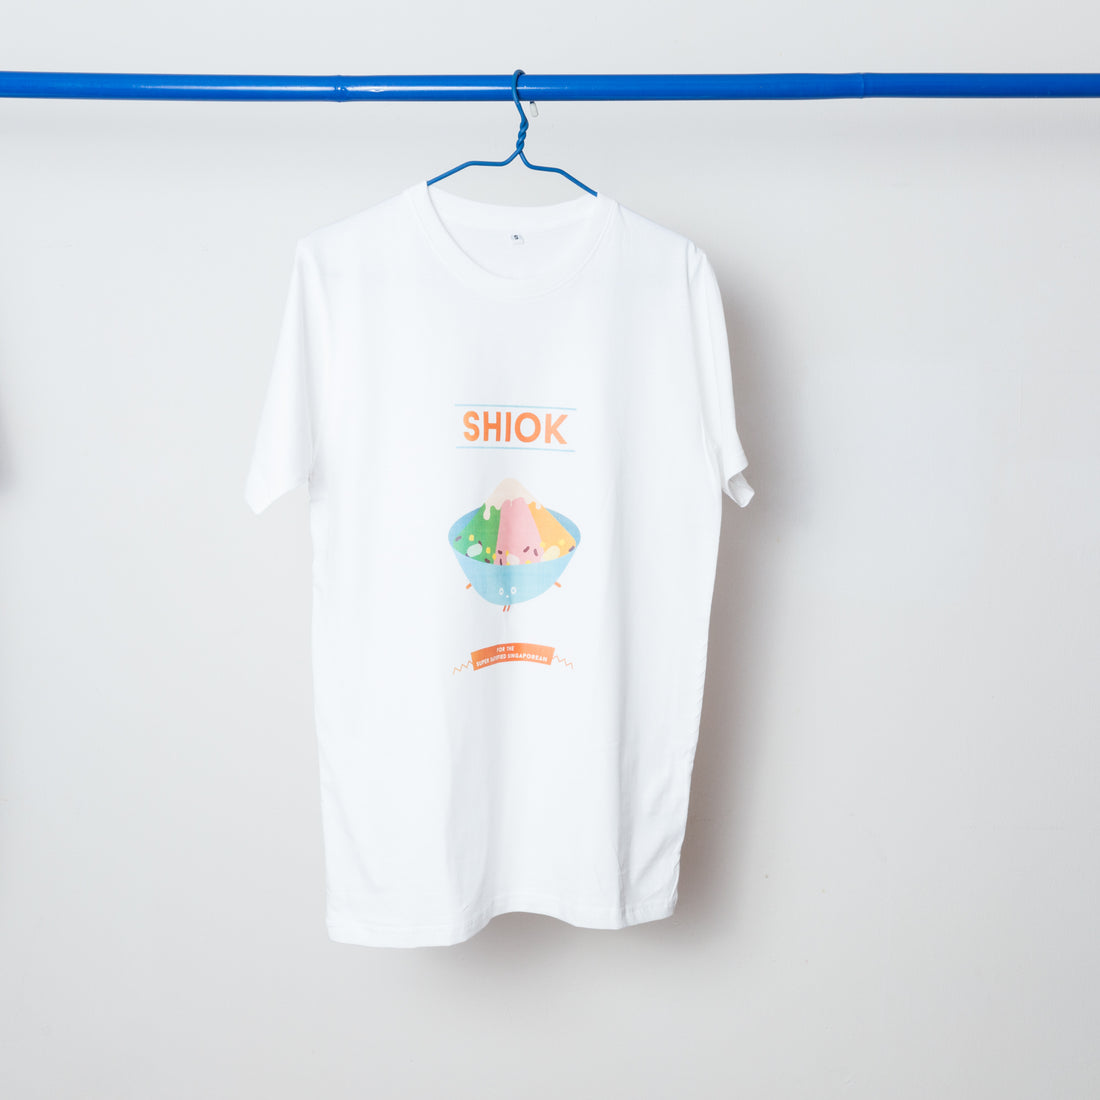 Shiok T-Shirt